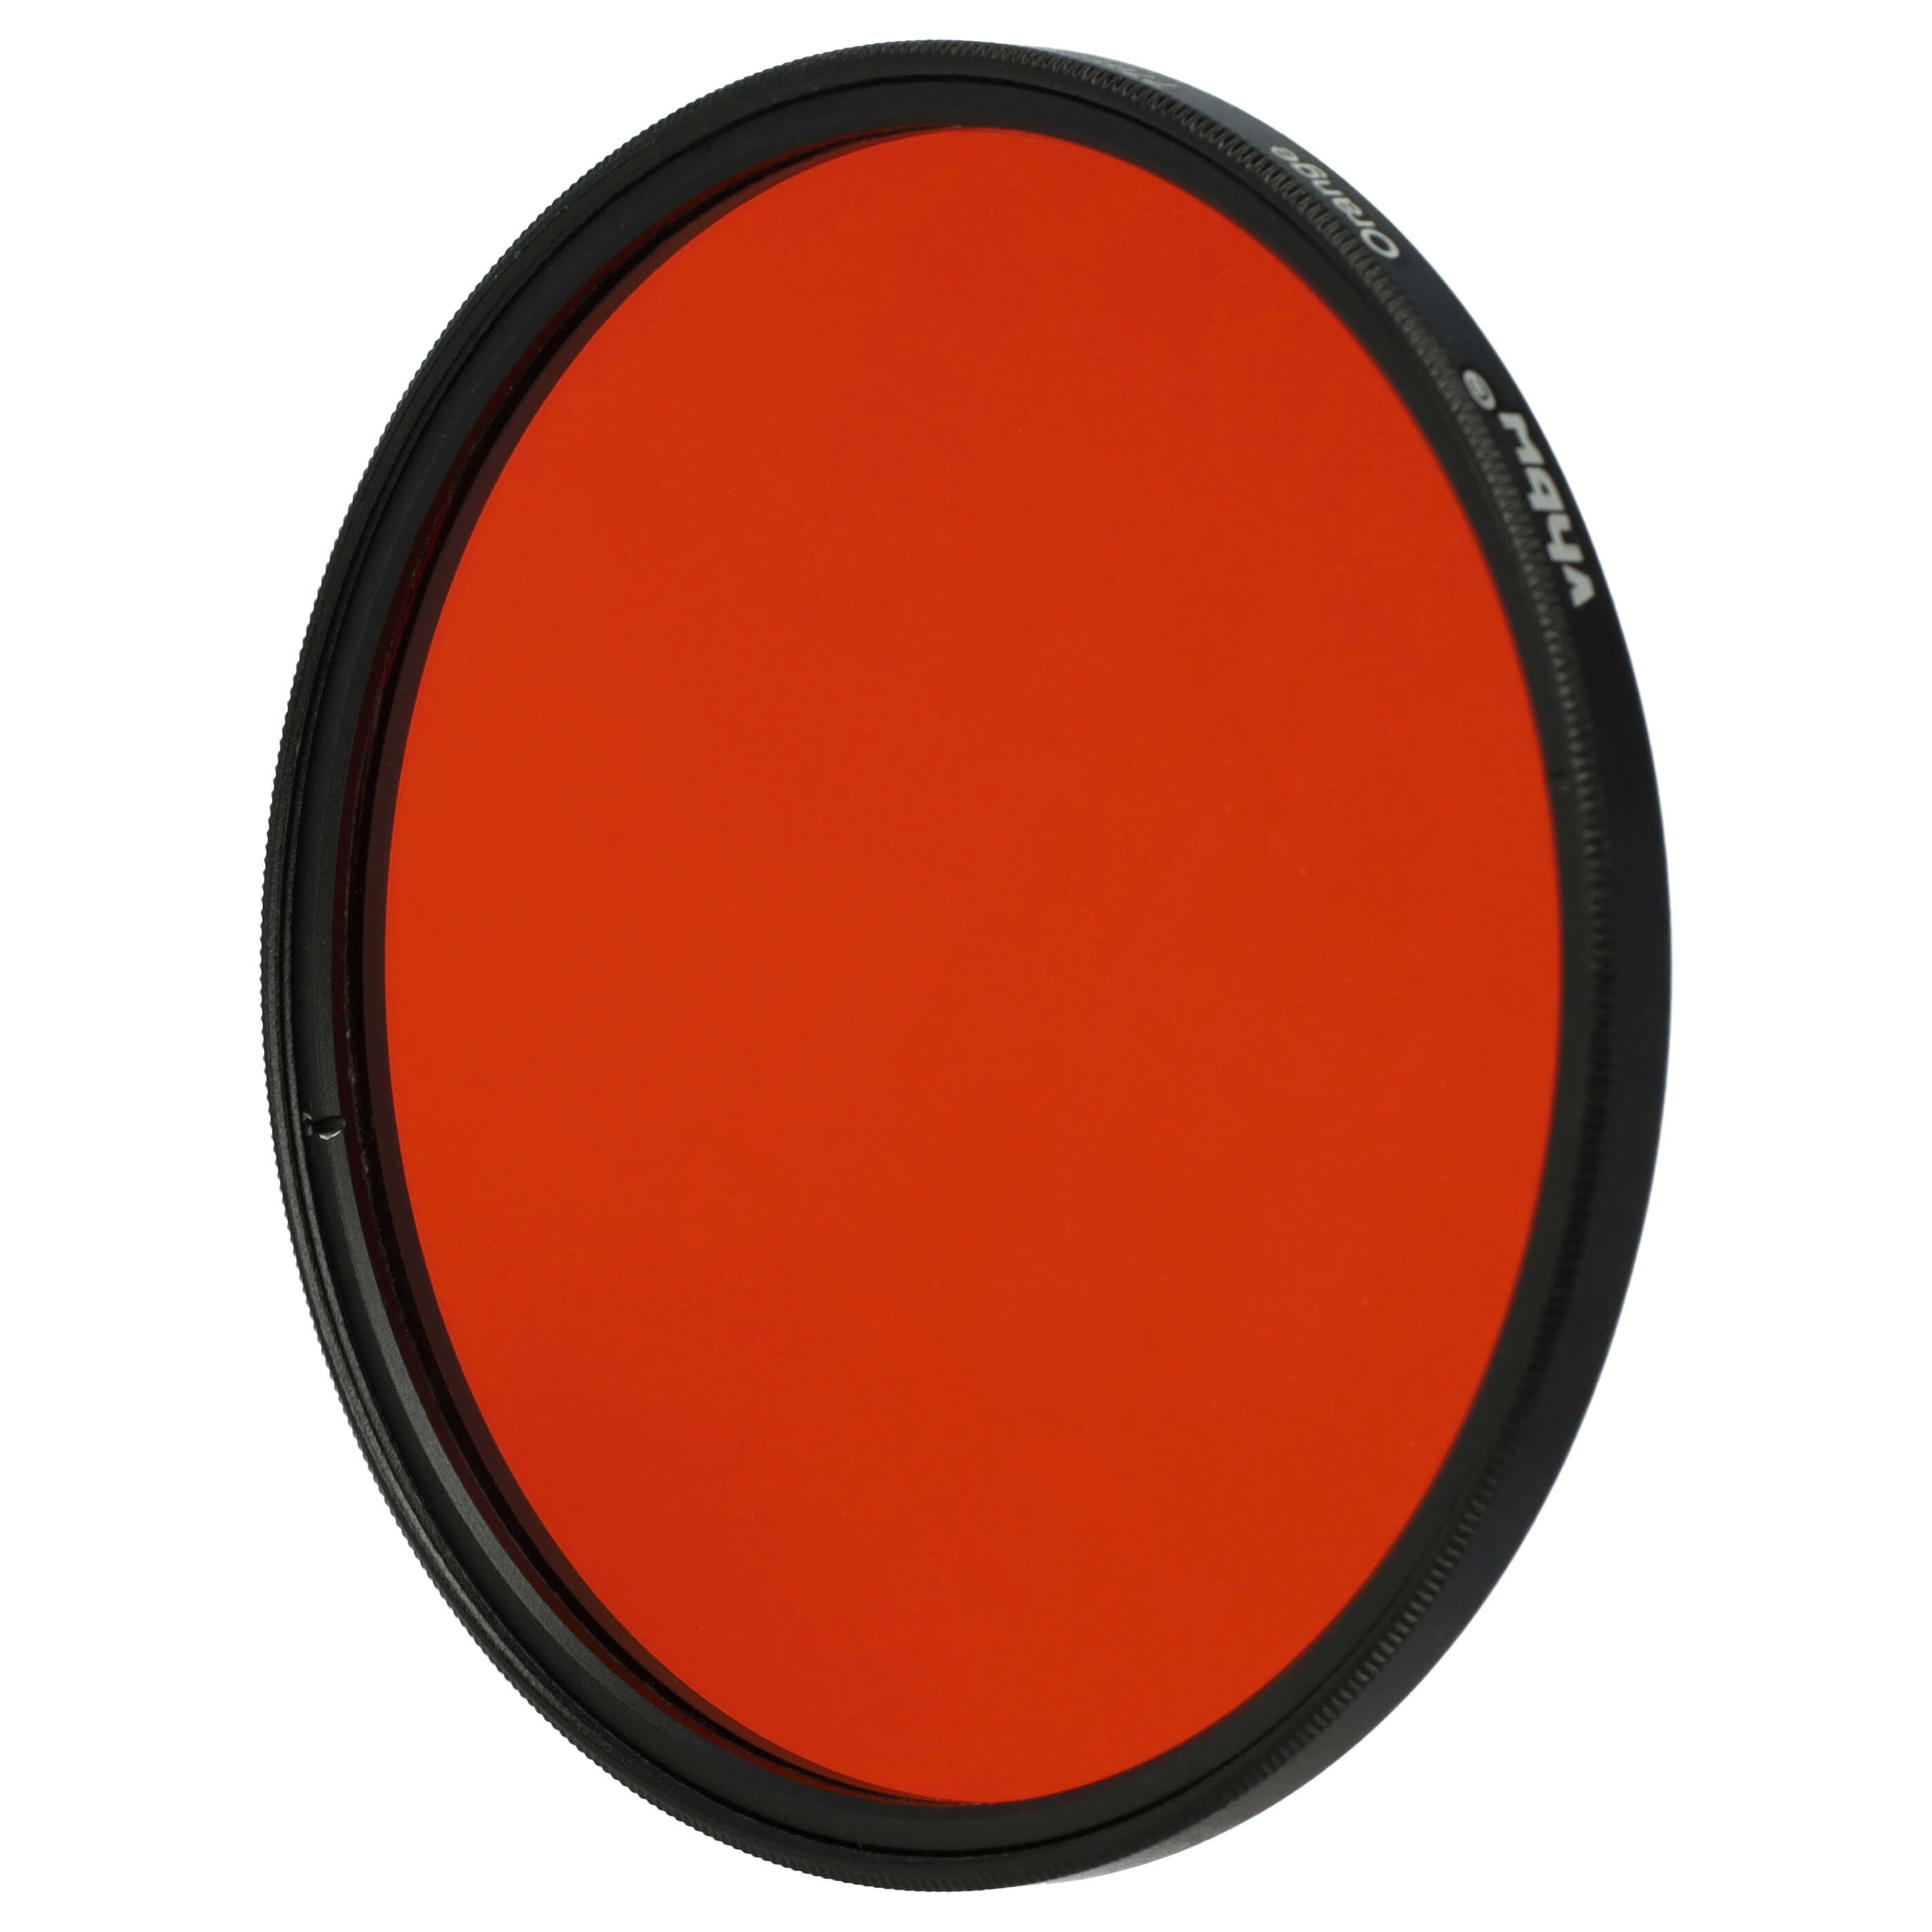 Coloured Filter, Orange suitable for Camera Lenses with 77 mm Filter Thread - Orange Filter